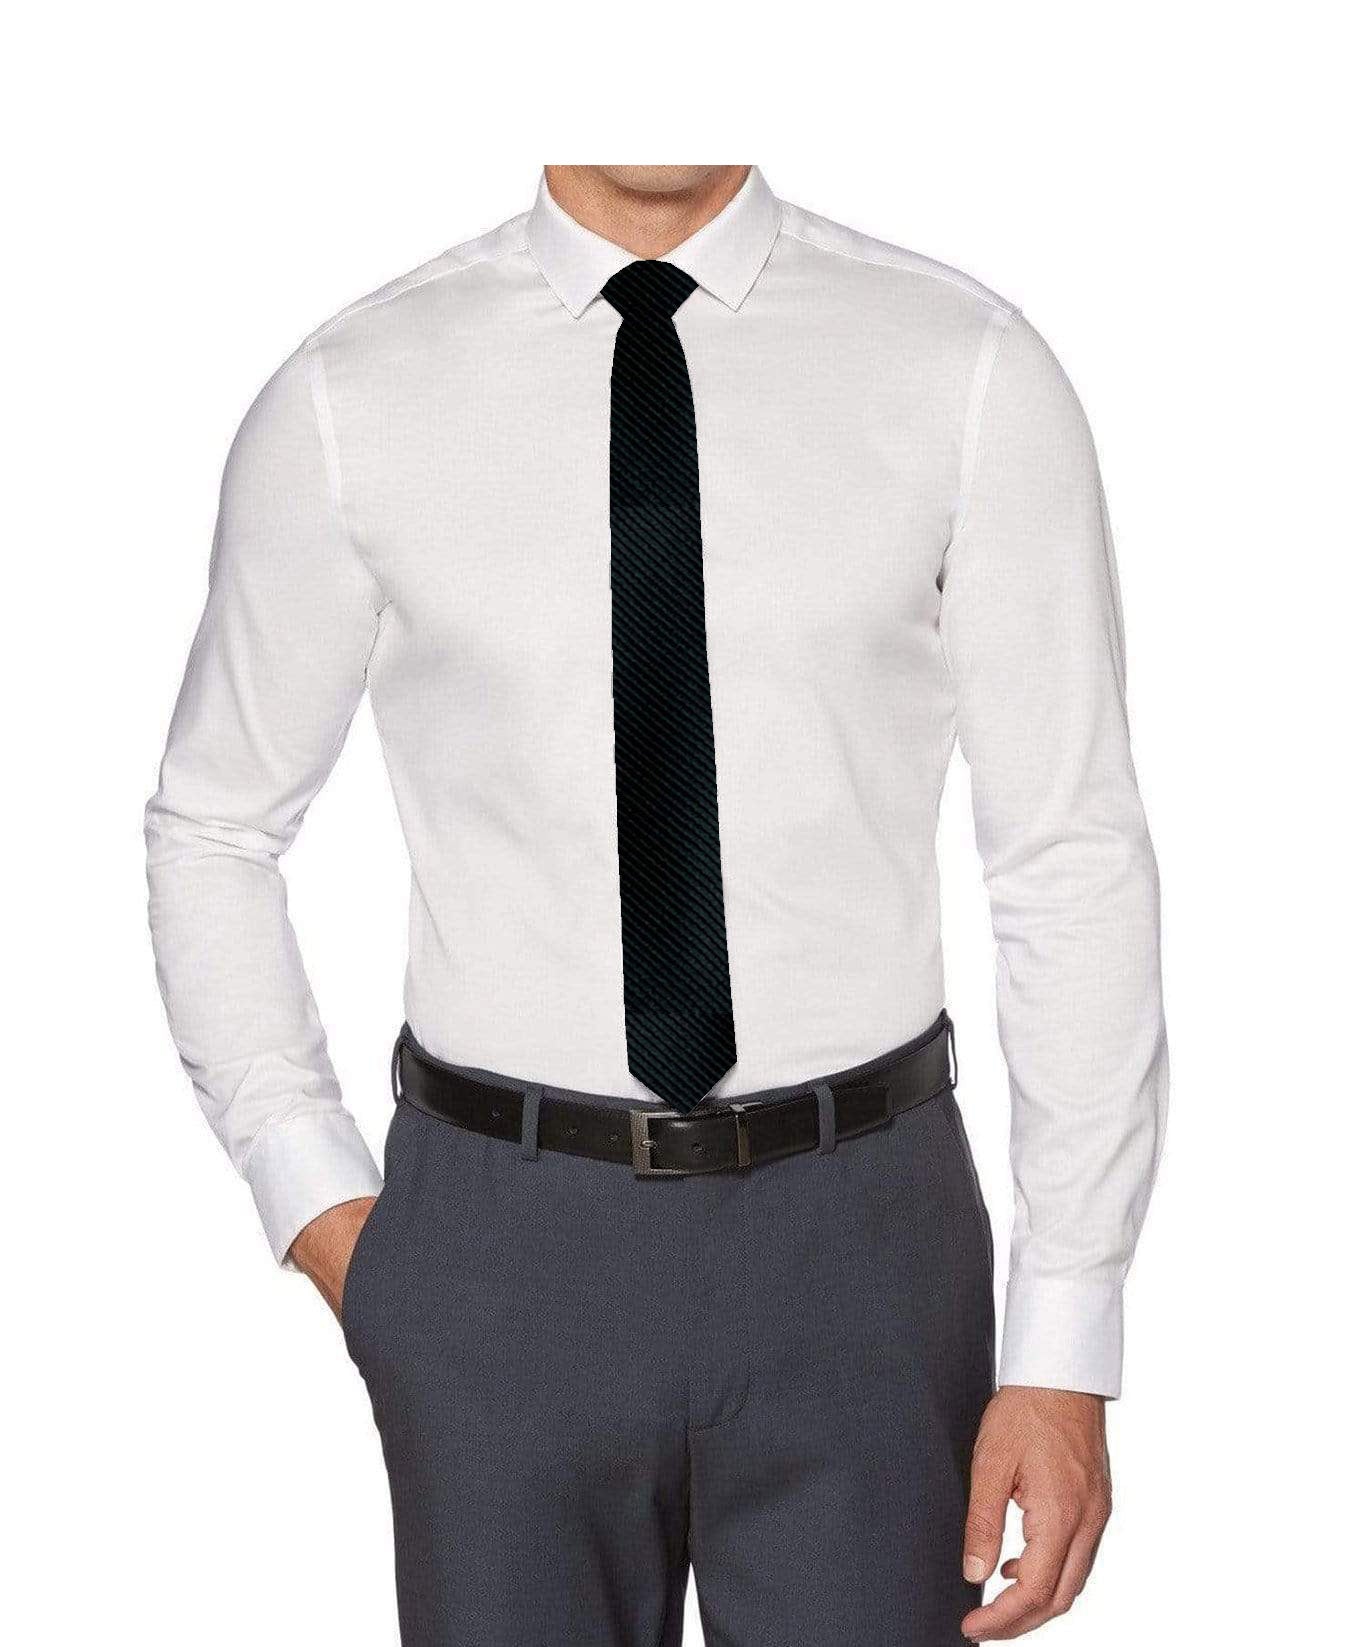 Perry Ellis Boys Dress Shirts w Black Tie Solid Shirts w Colored Tie